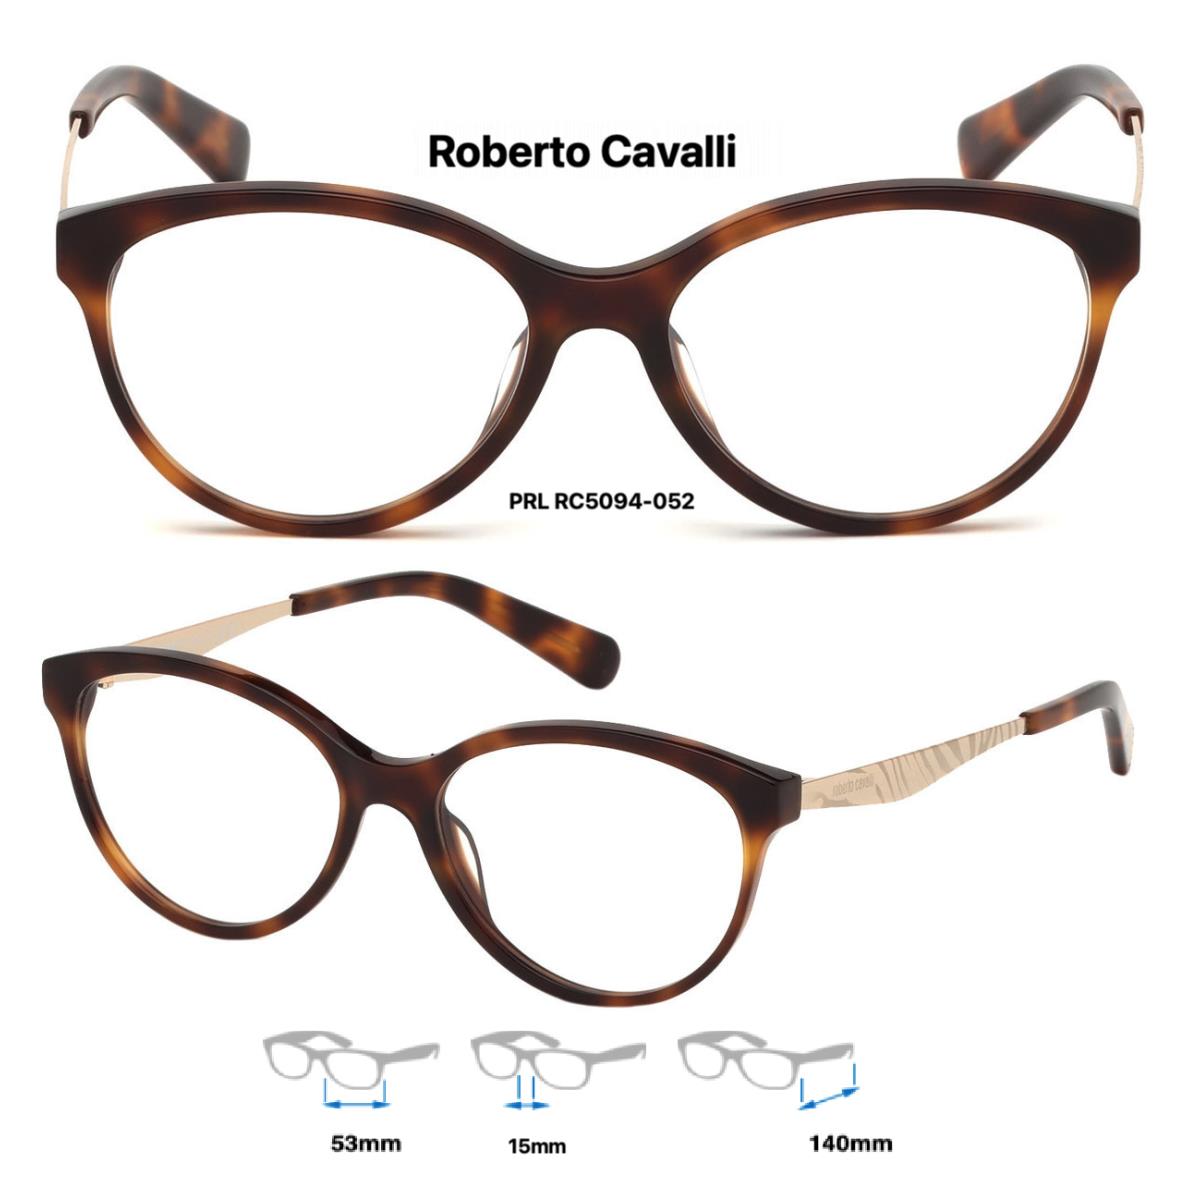 Roberto Cavalli RC5094-052 Eyeglass Frames Womens Havana/gold Size 53mm